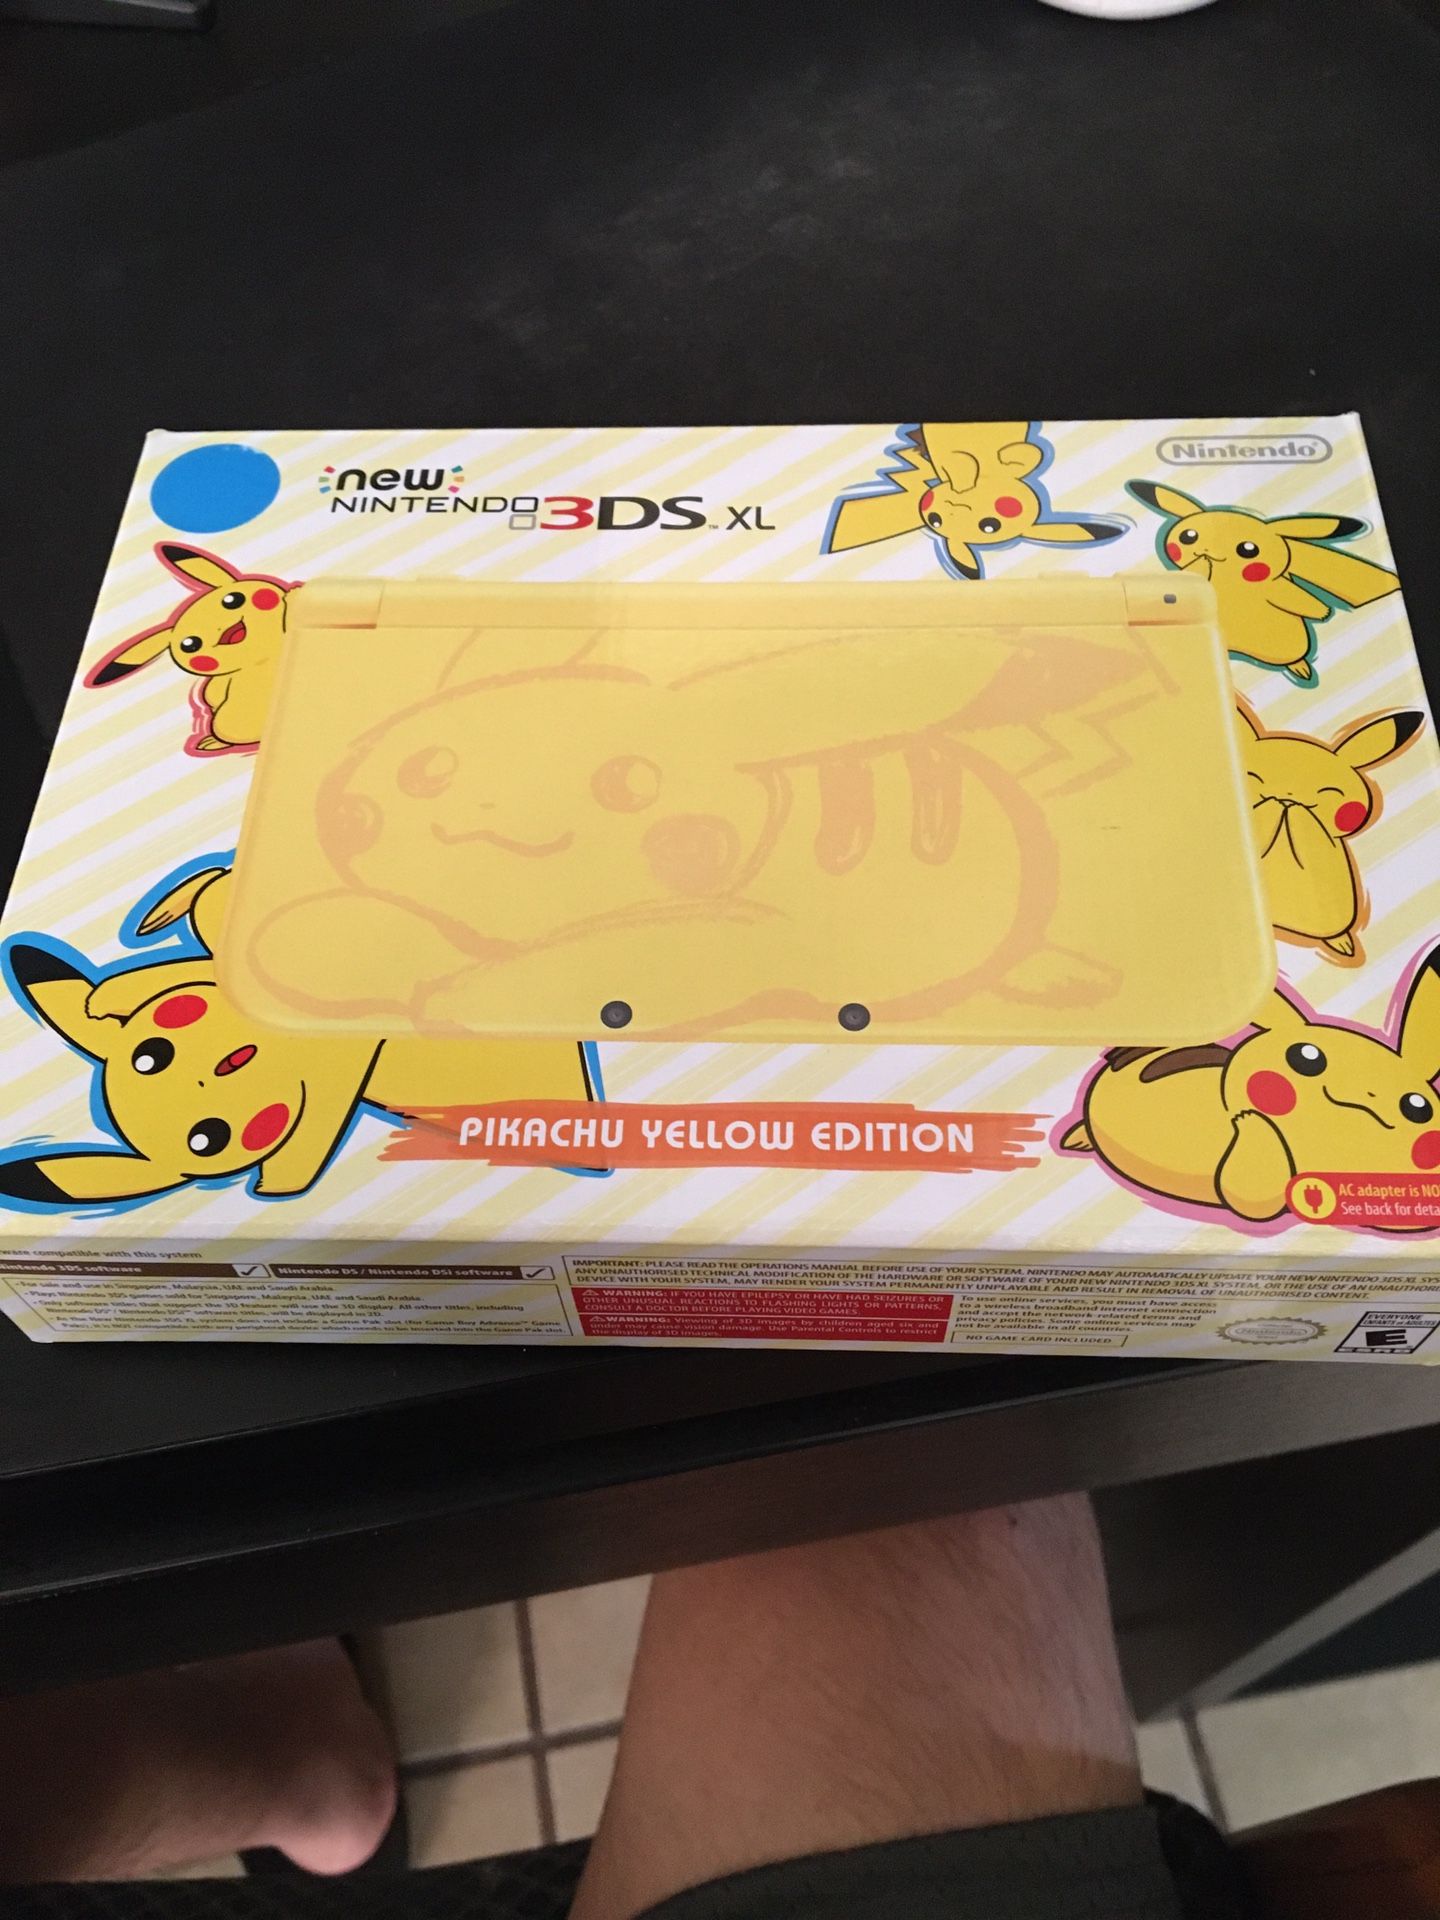 New Nintendo 3ds xl - Pikachu Yellow Edition